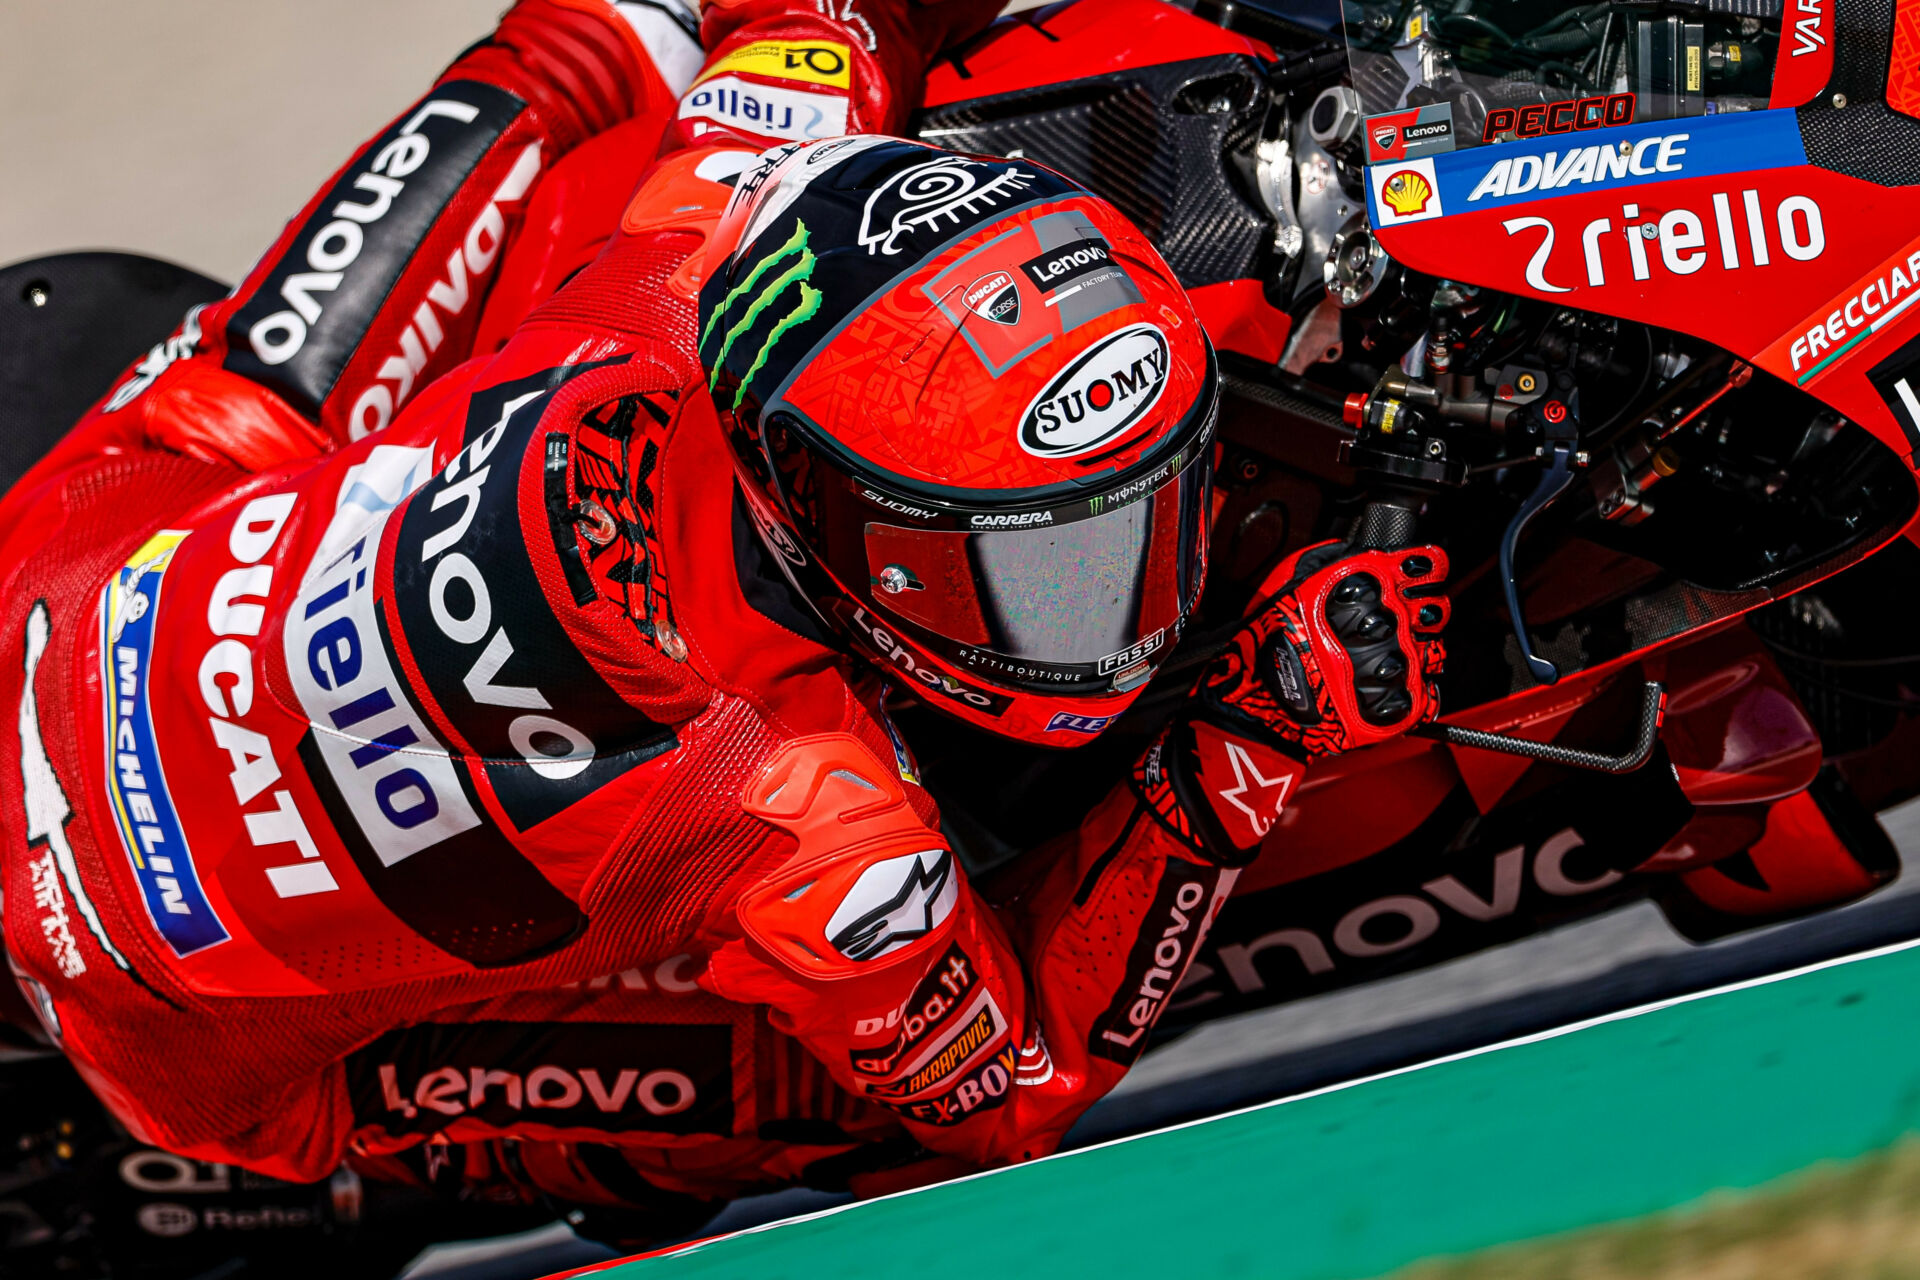 MotoGP: Bagnaia Beats Lap Record, Takes Pole Position At Assen World Magazine. Motorcycle Riding, Racing & Tech News